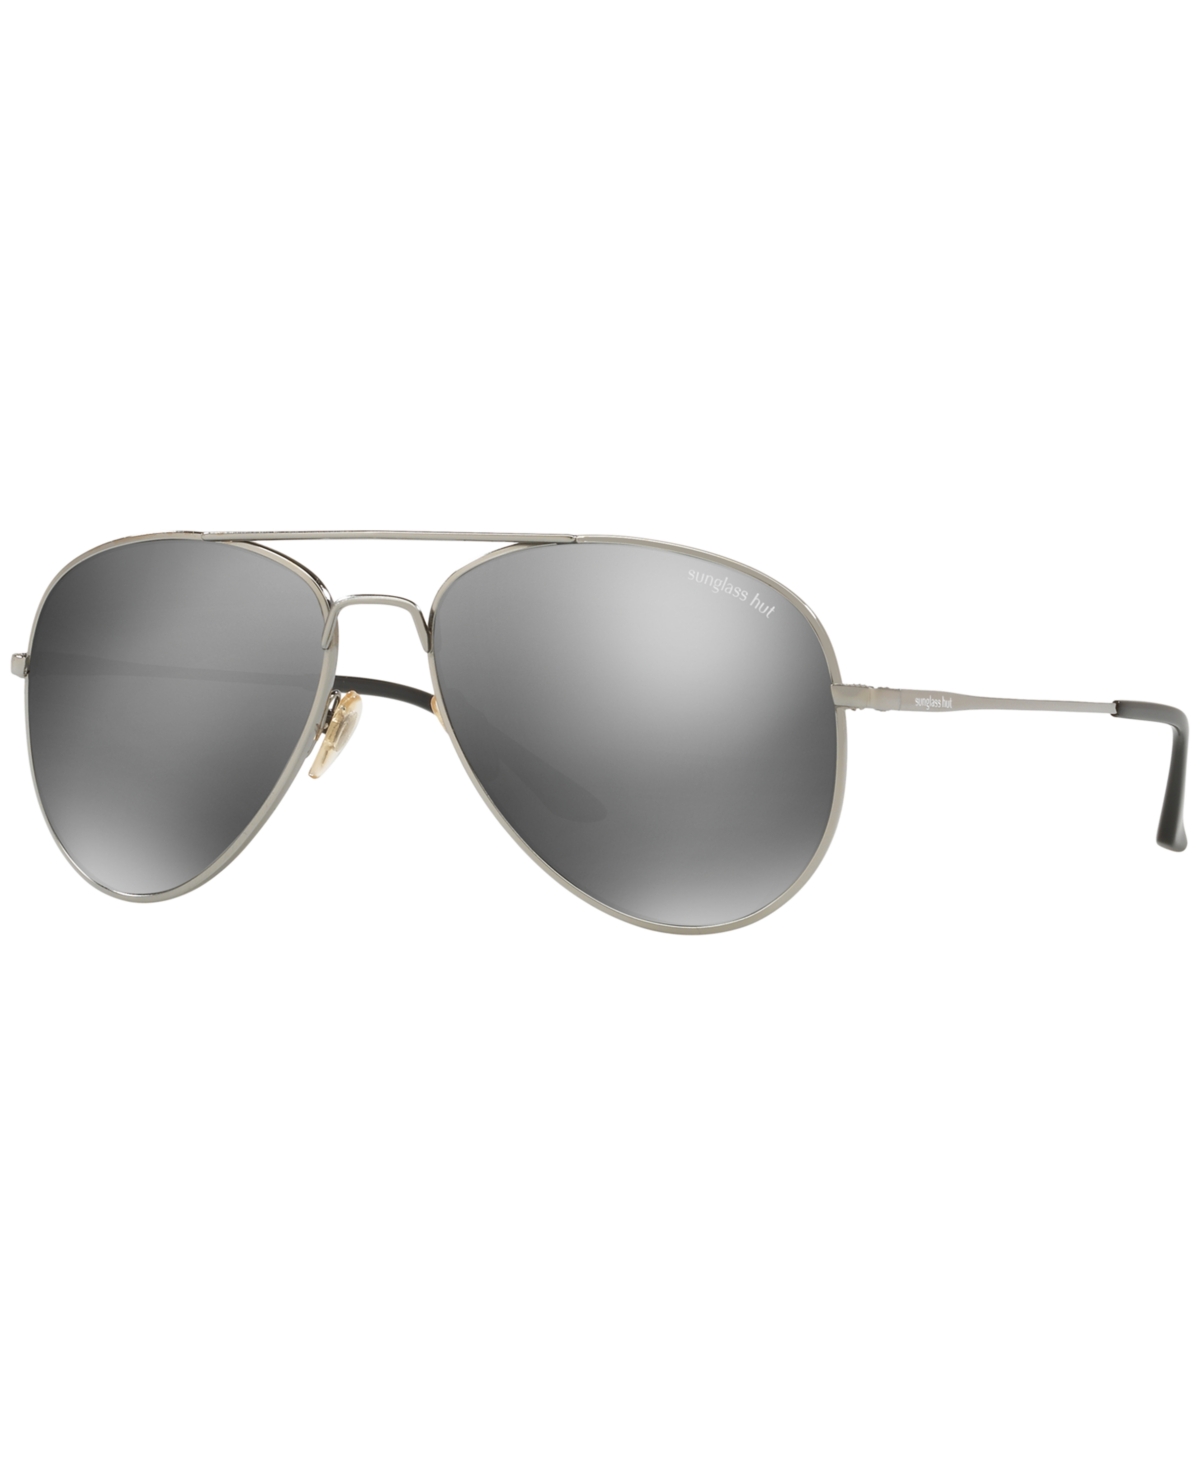 Sunglass Hut Collection Sunglasses, Hu1001 59 In Gunmetal,grey Mirror